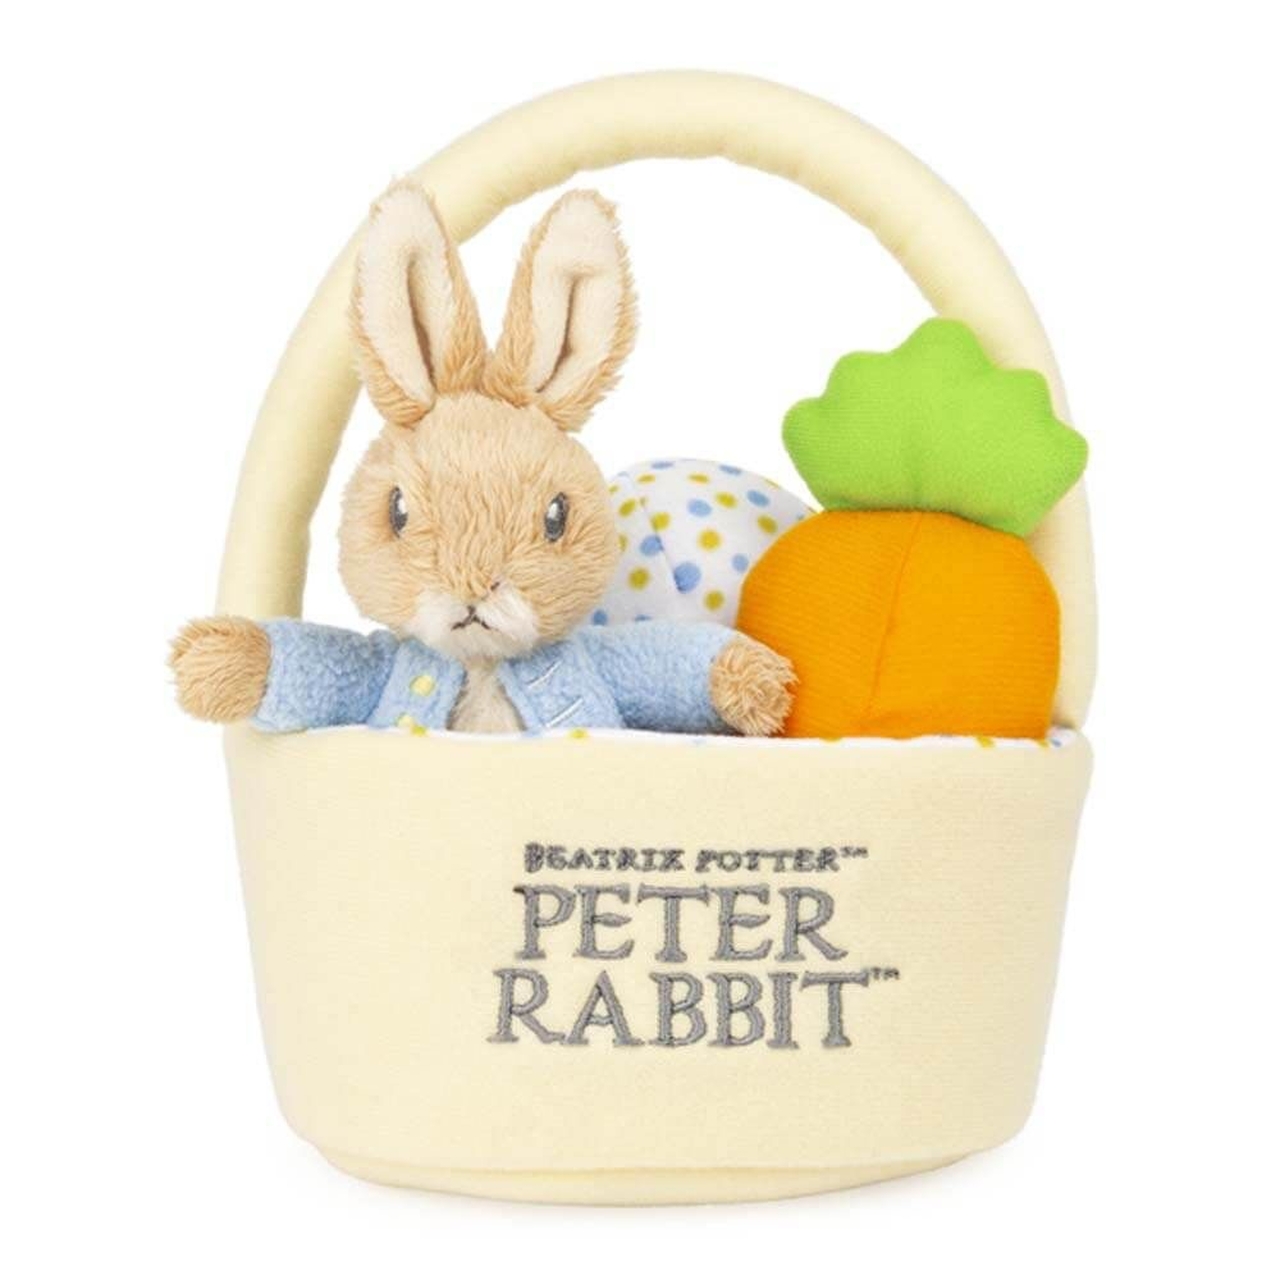 Peter Rabbit Easter Basket Playset